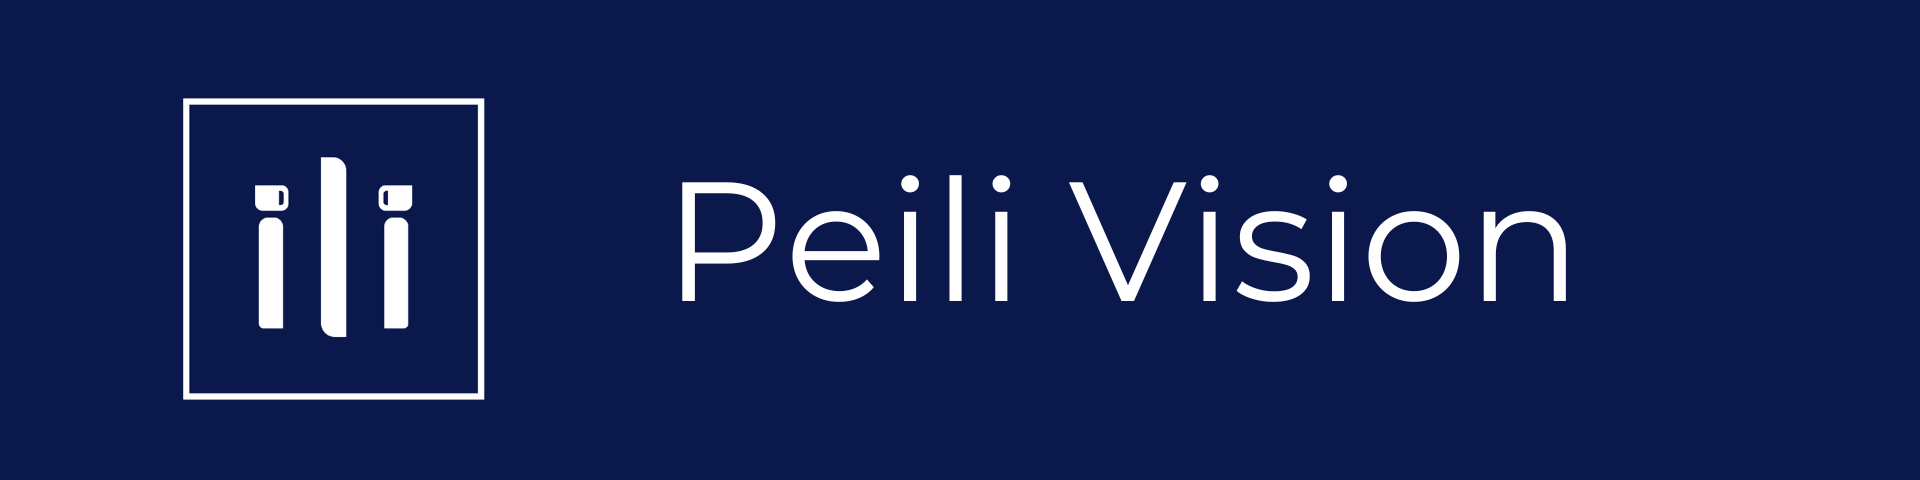 Peili Vision Company Logo